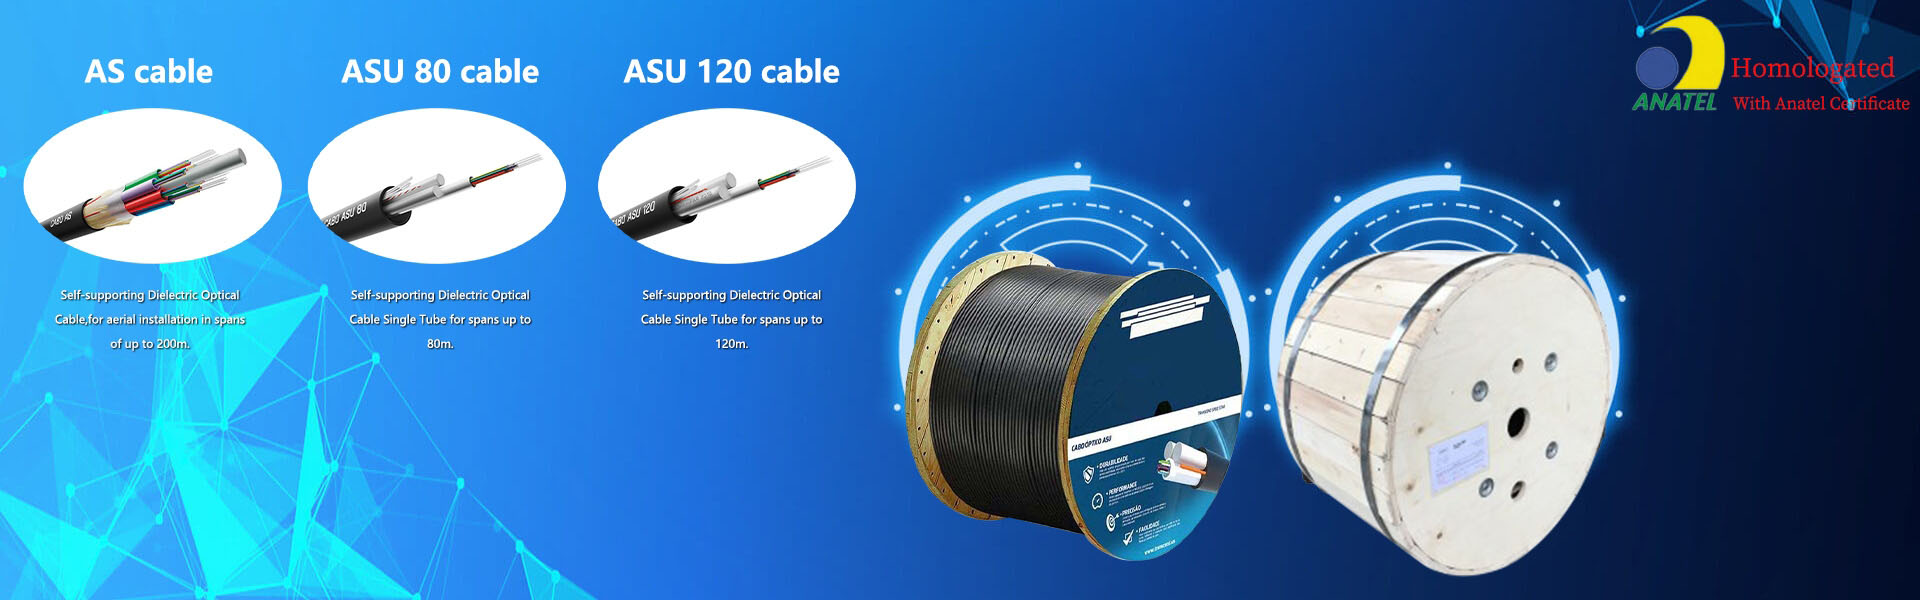 ASU Cable